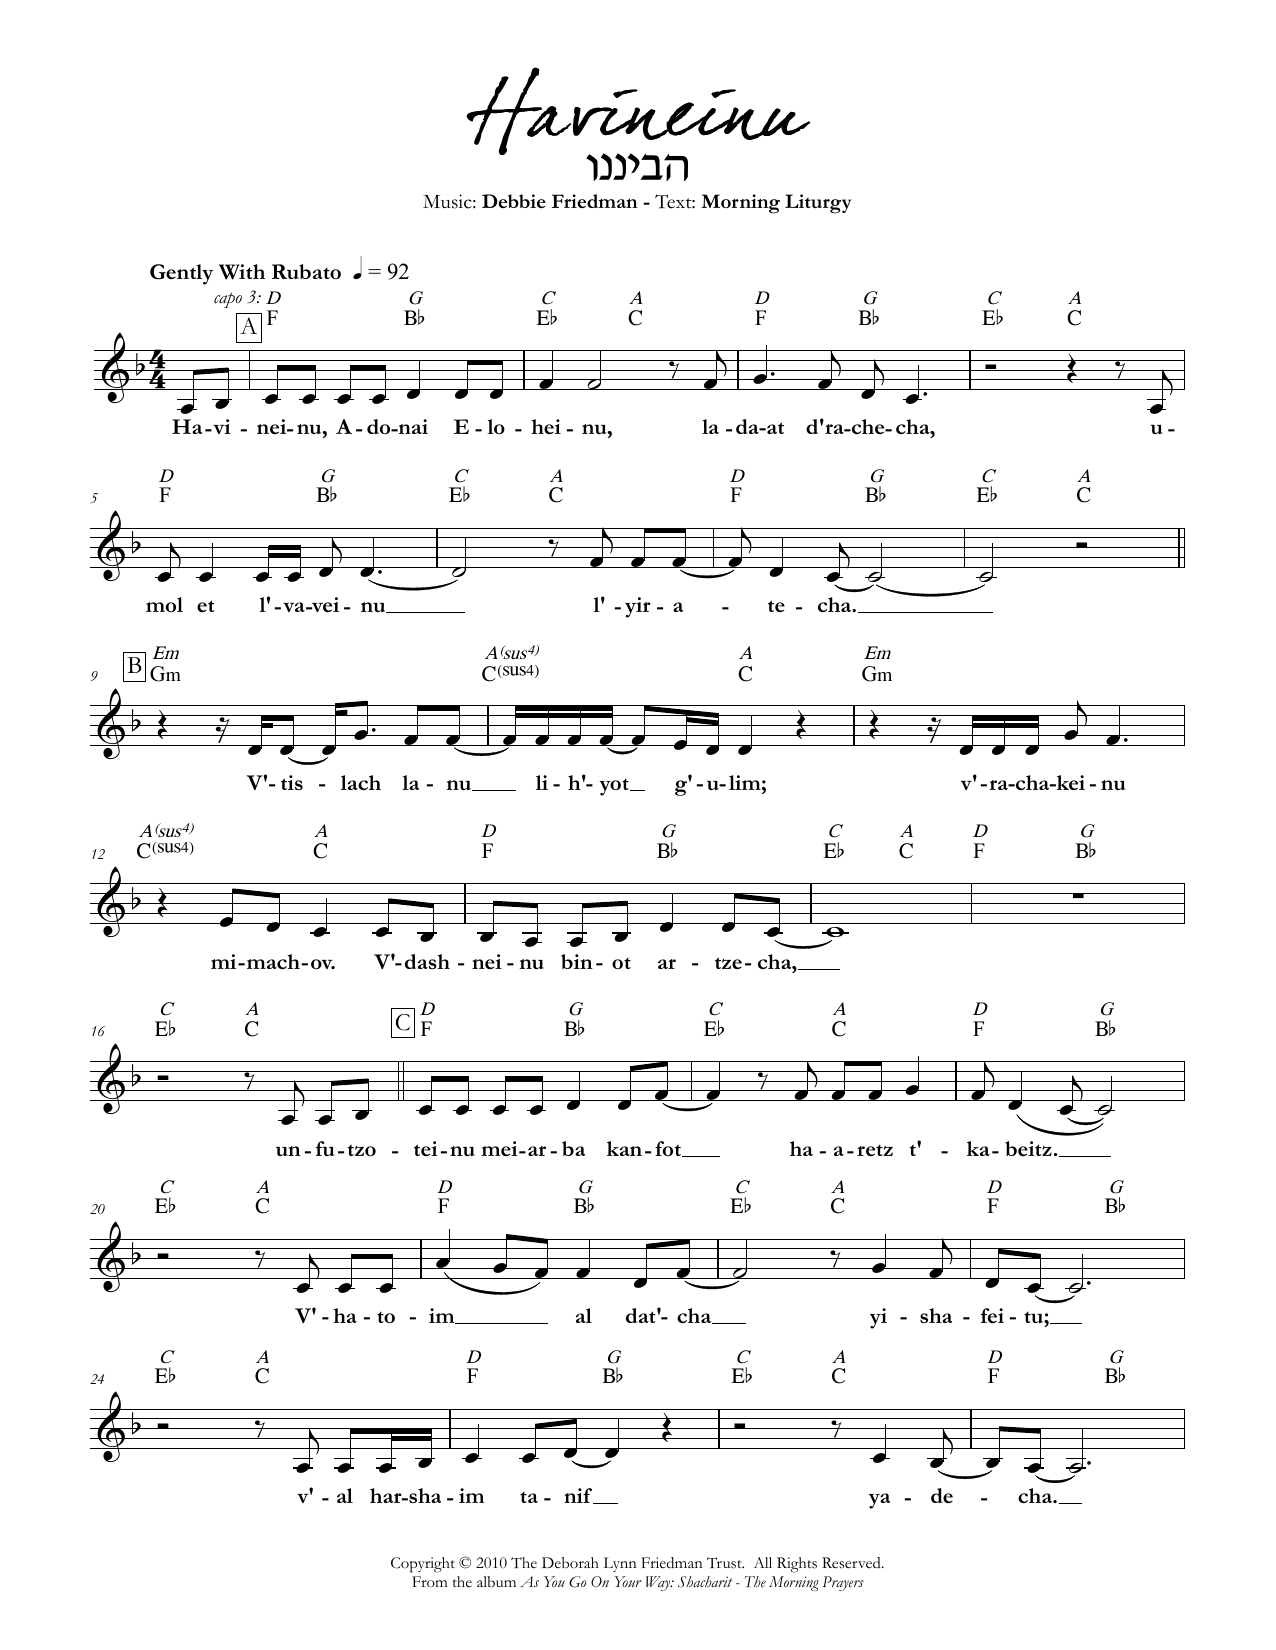 Debbie Friedman Havineinu Sheet Music Notes & Chords for Lead Sheet / Fake Book - Download or Print PDF